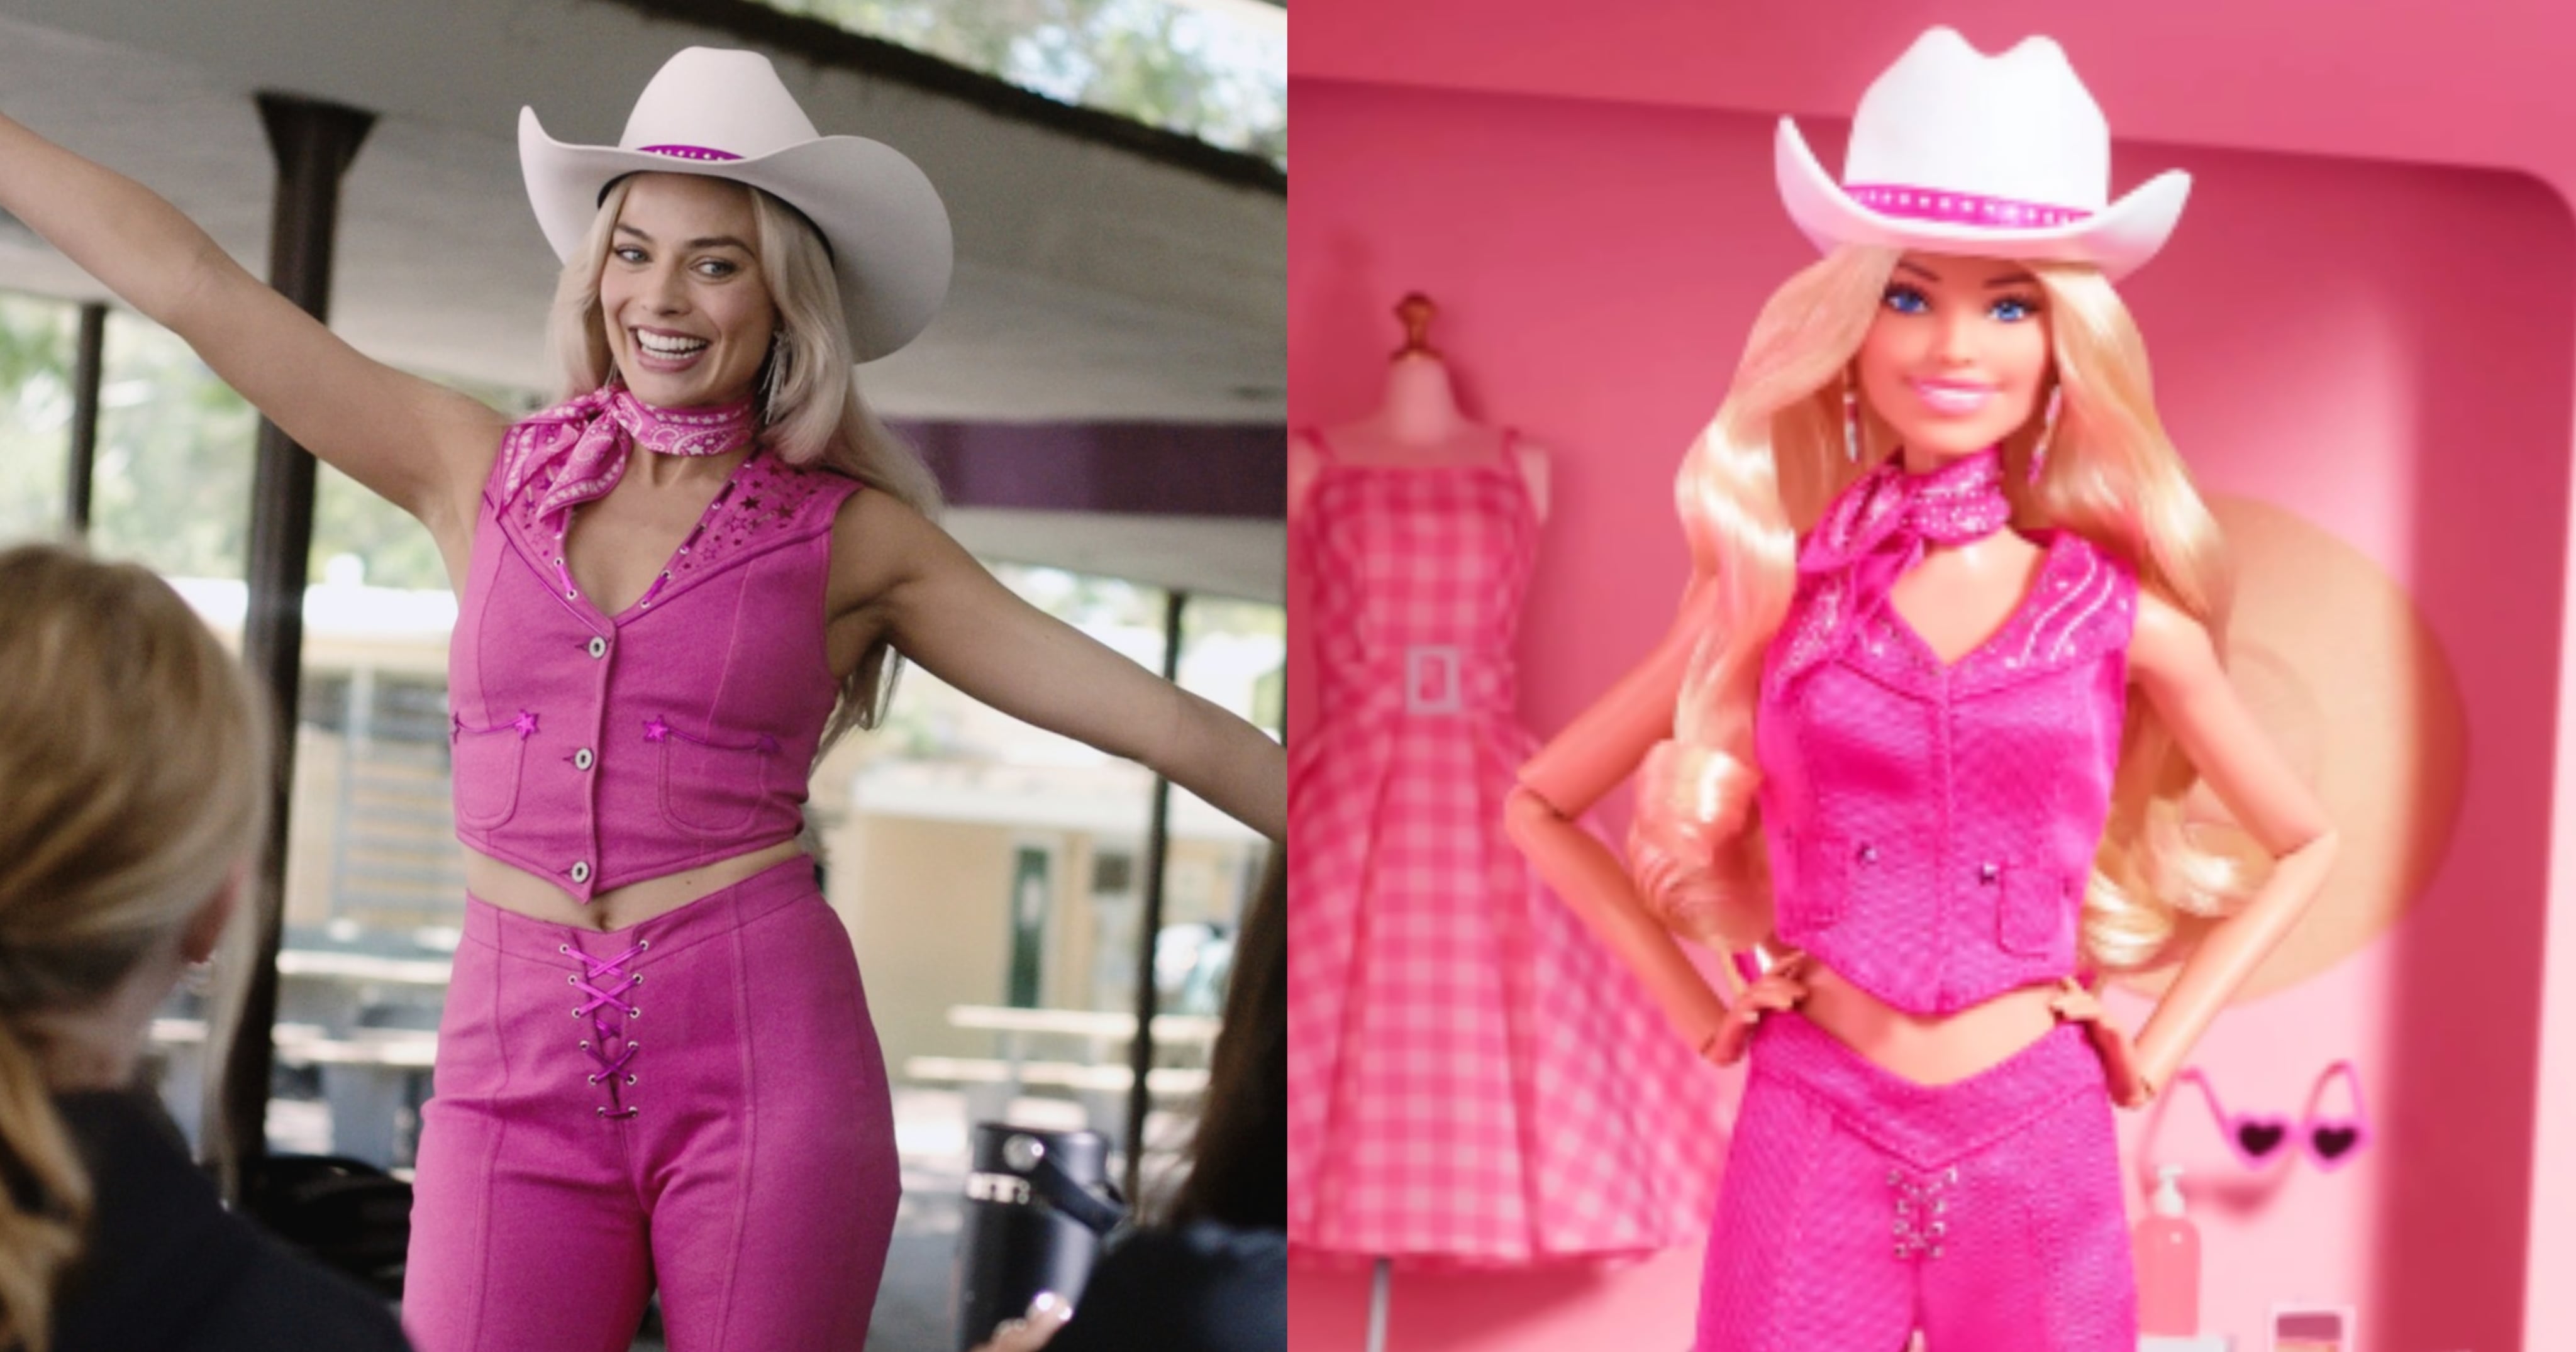 Mattel Barbie Movie Ken Doll, Striped Outfit, Dolls